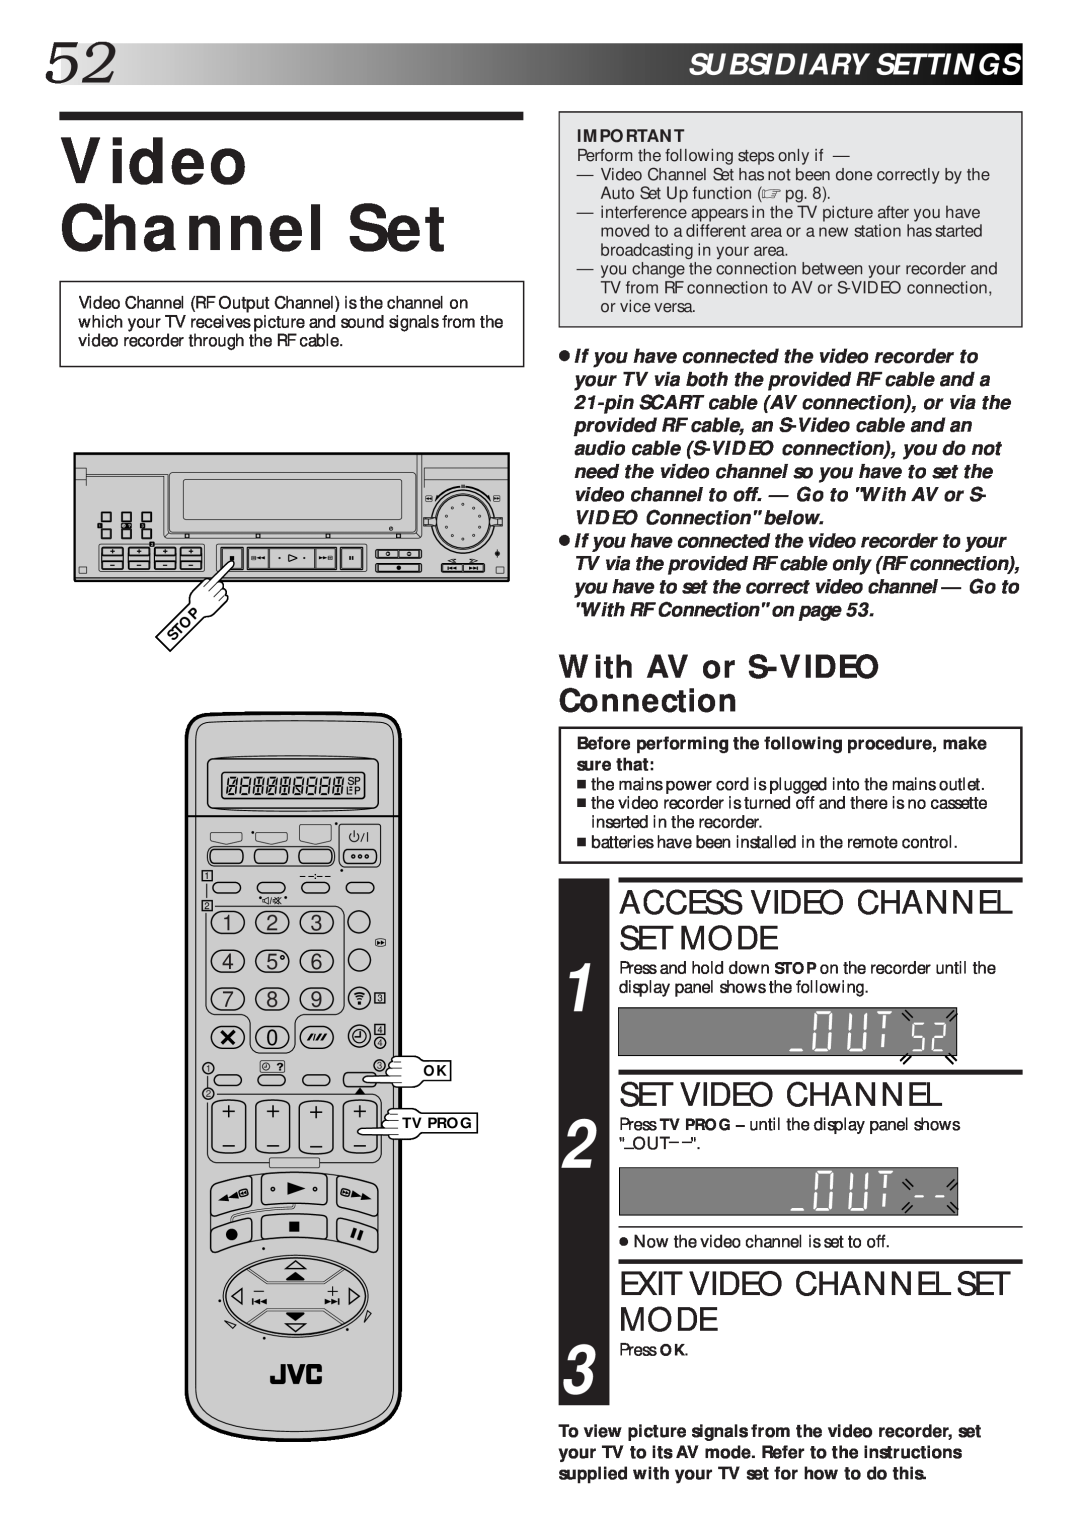 JVC HR-S9600EK Access Video Channel Set Mode, Set Video Channel, Exit Video Channel Set Mode, 52SUBSIDIARYSETTINGS 